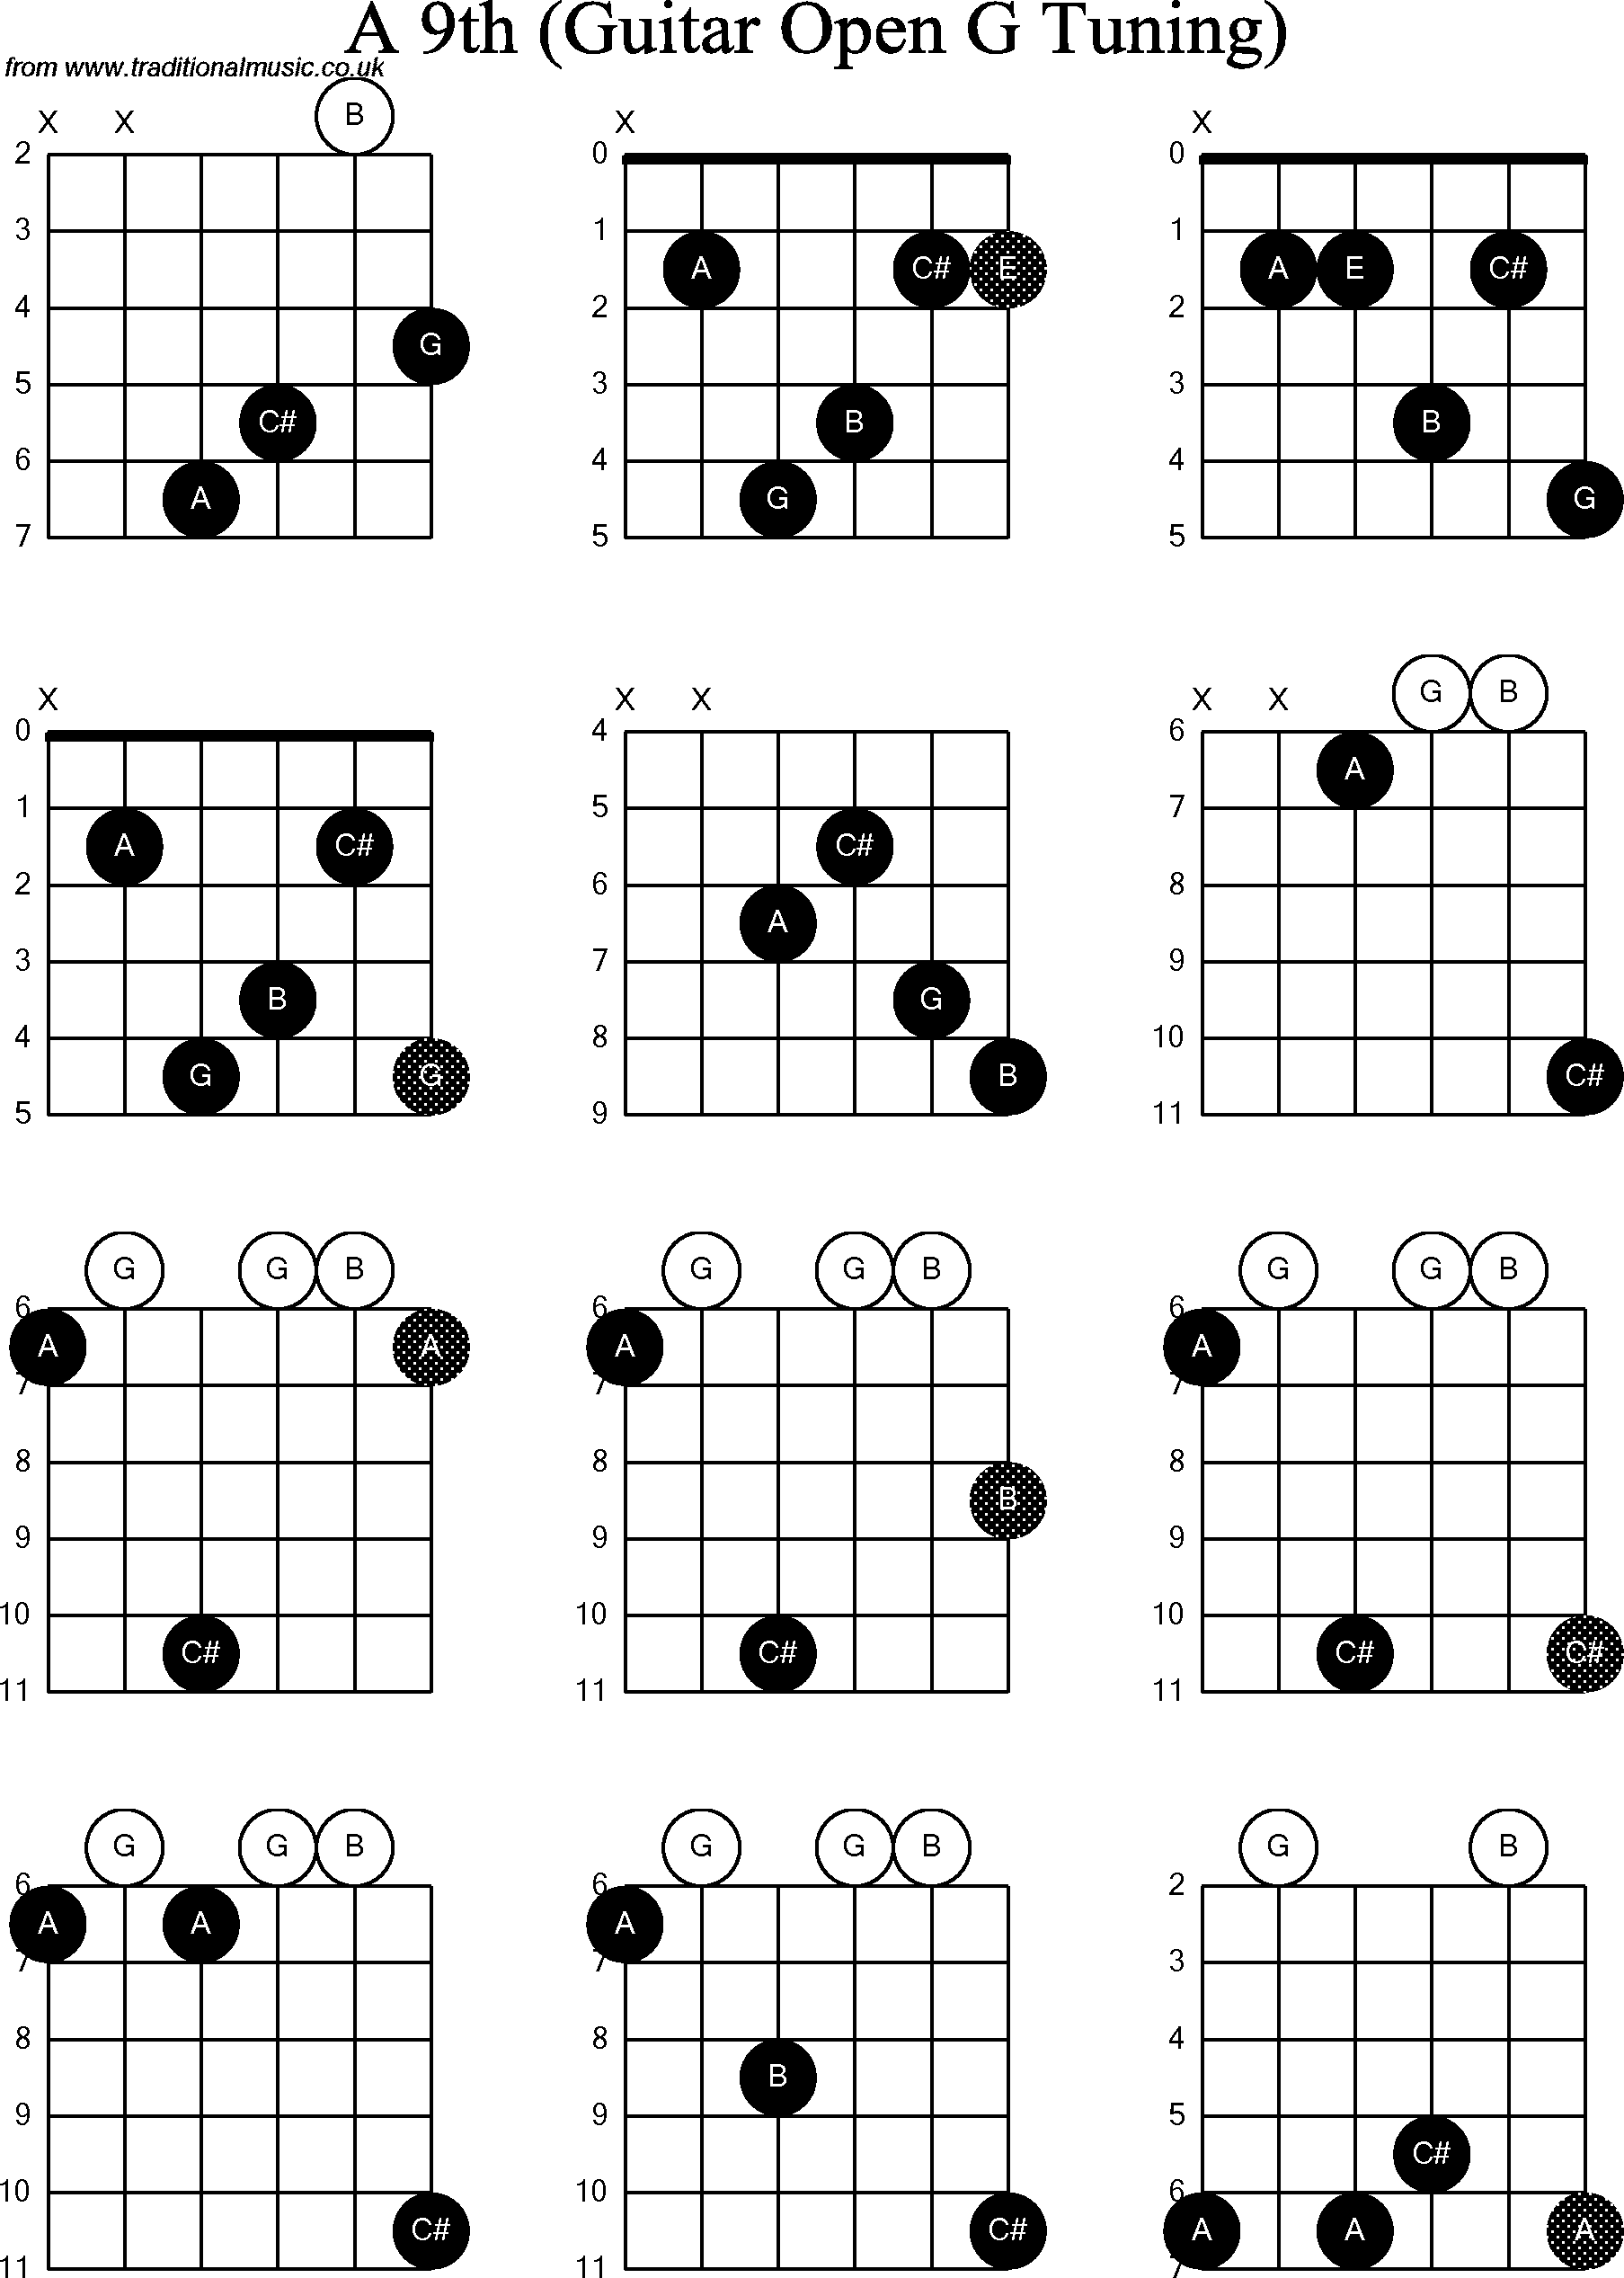 Chord diagrams for Dobro A9th